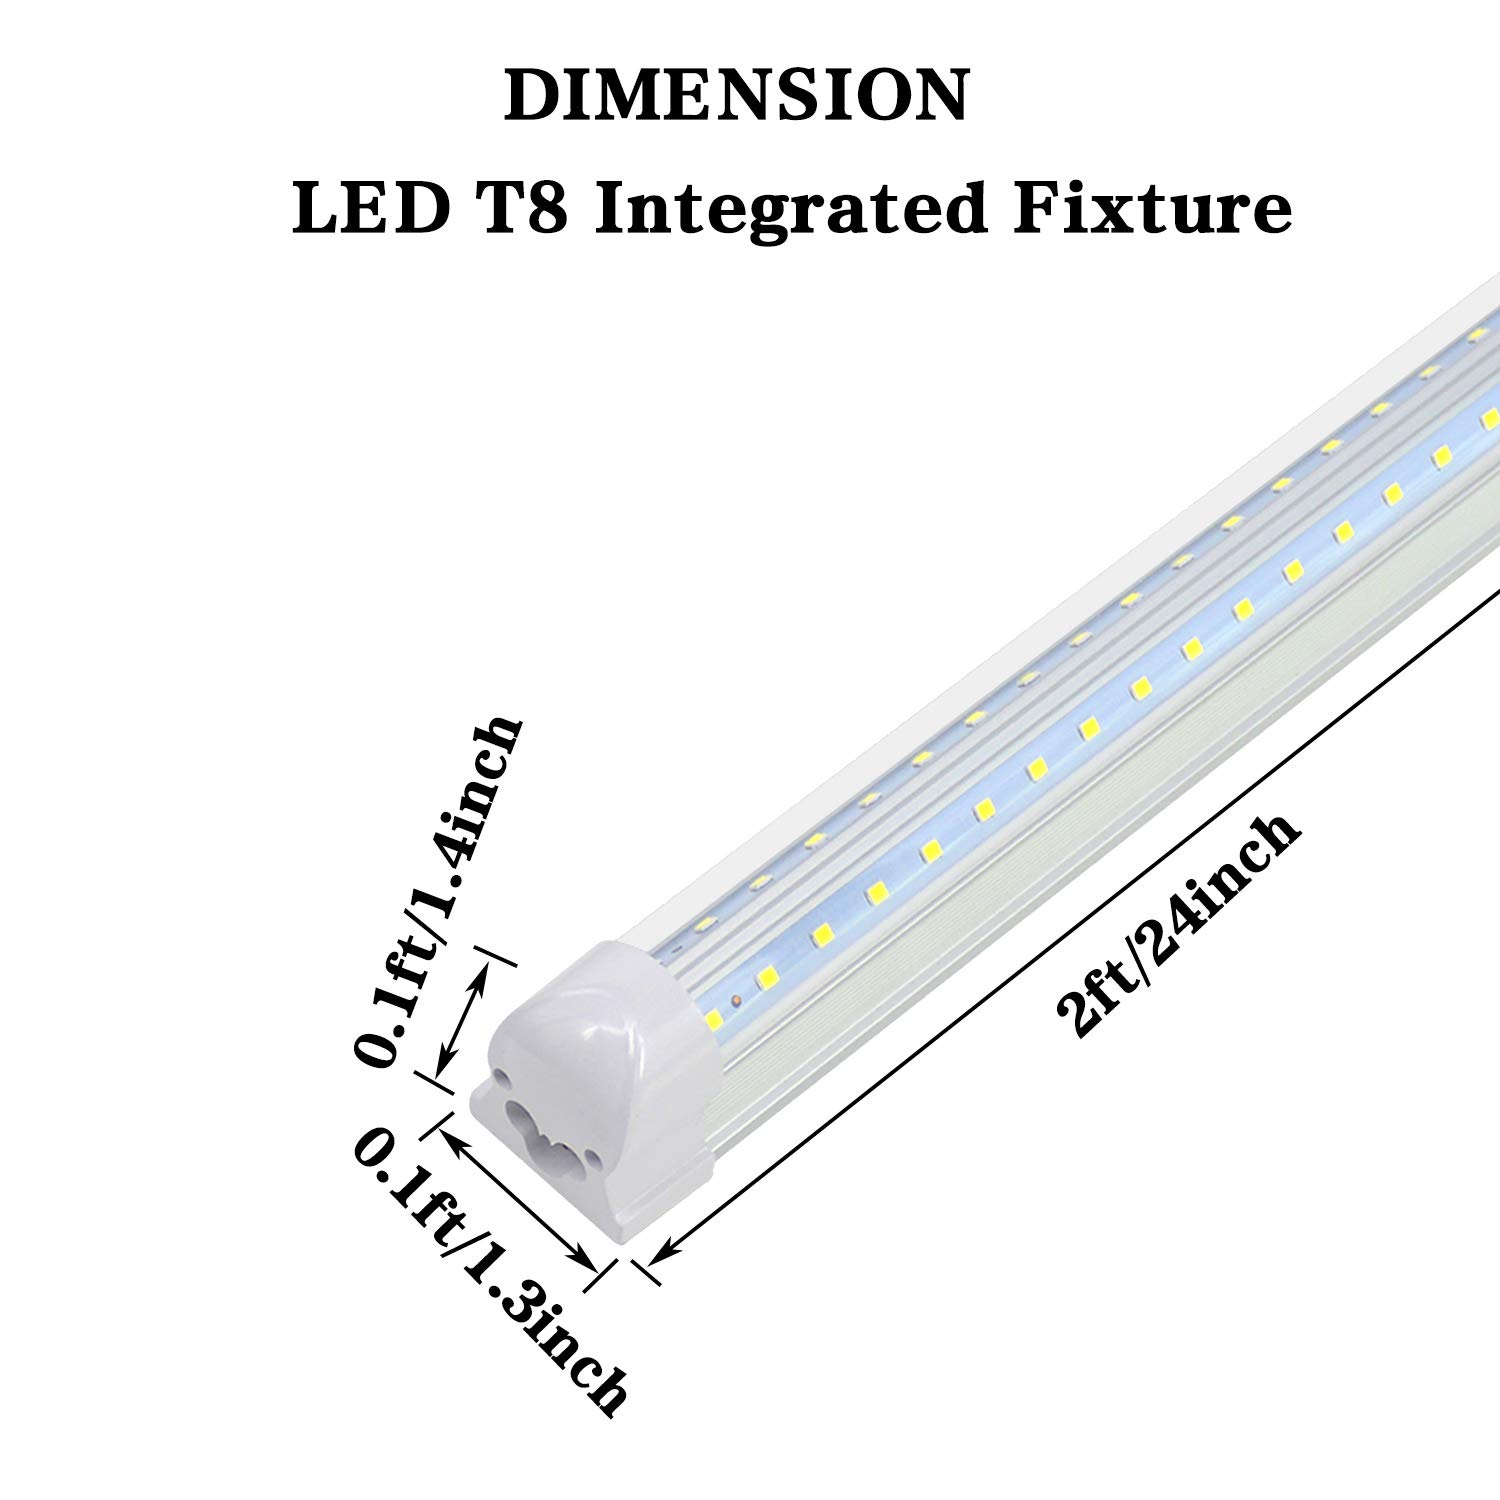 T8 Integrated Single Fixture - 2FT LED Light Fixture